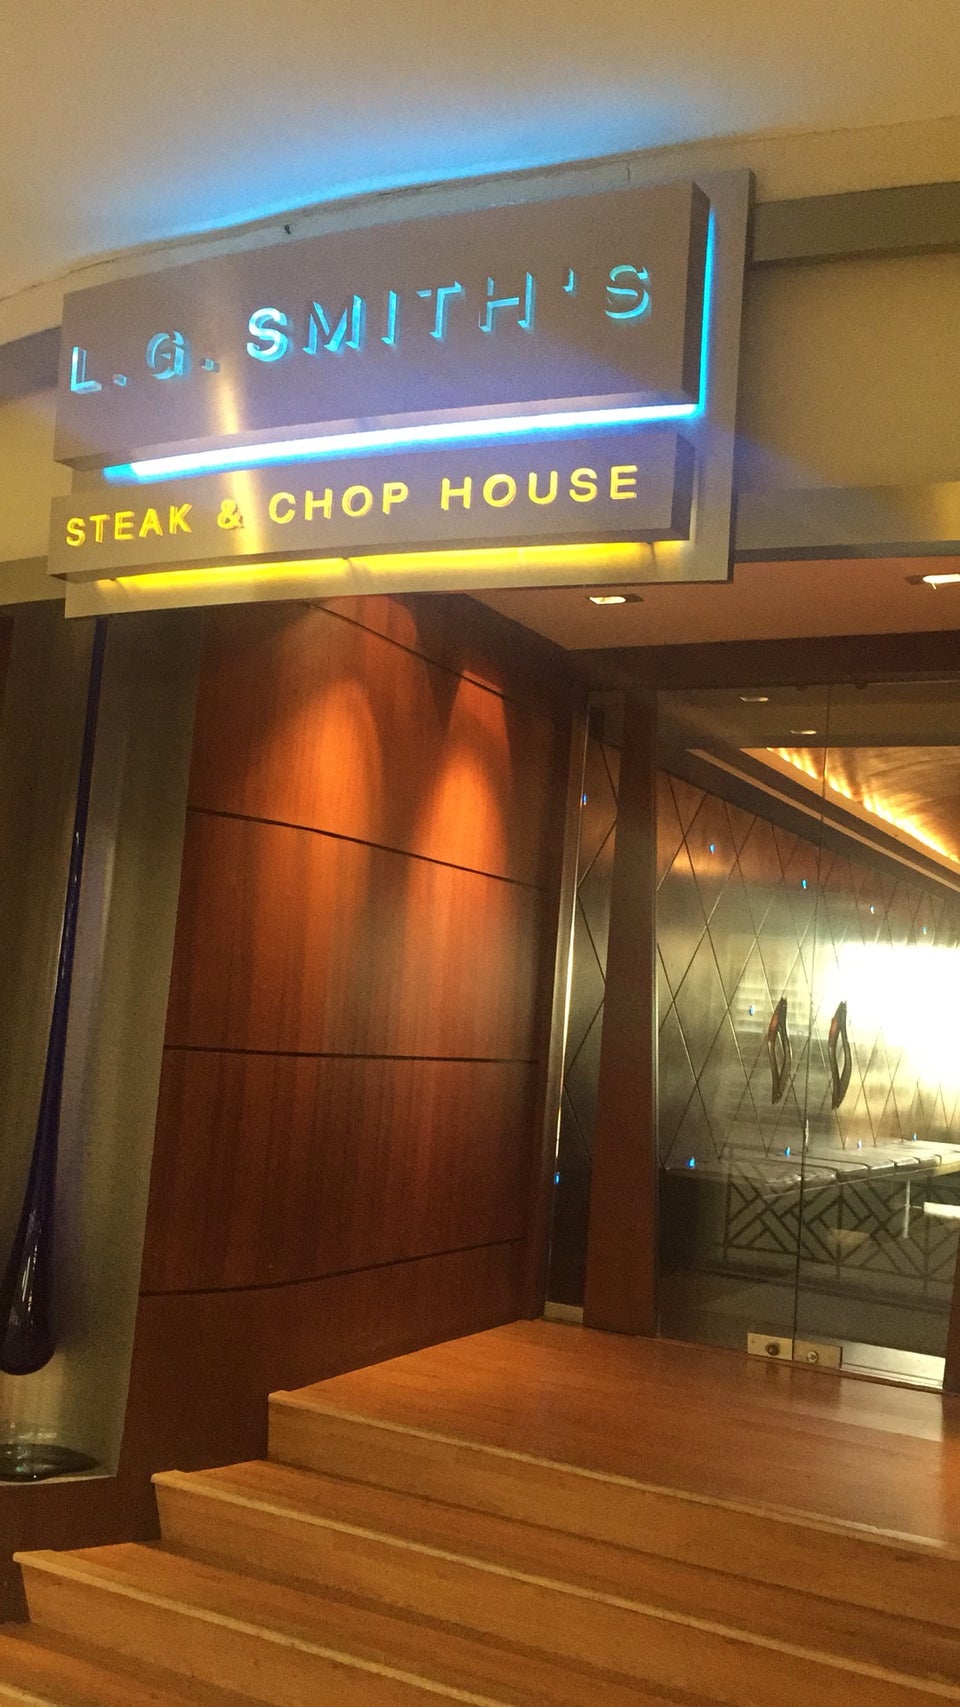 Photo of L.G. Smith's Steak & Chop House